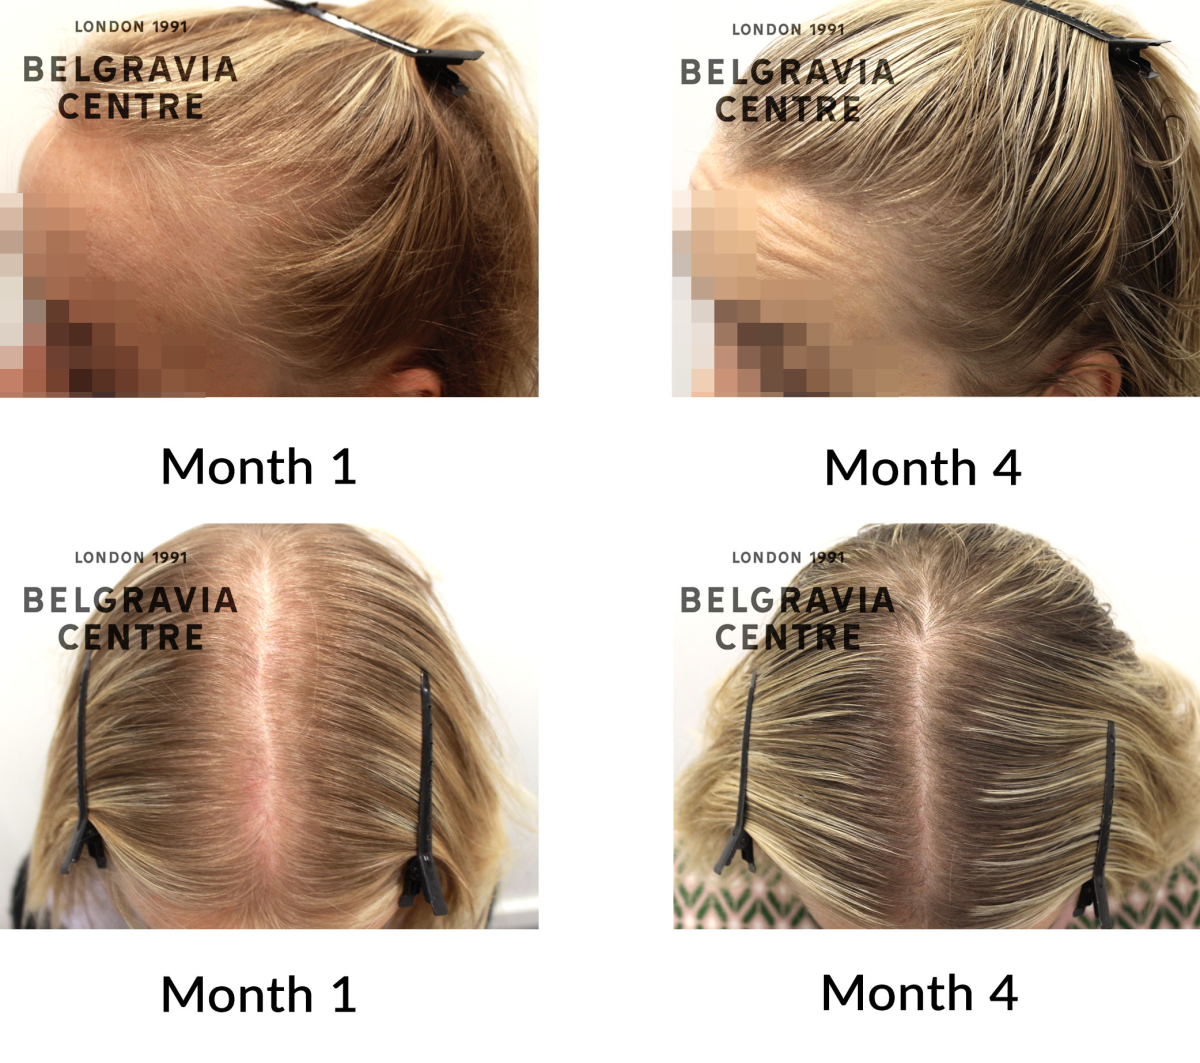 female pattern hair loss the belgravia centre 464493